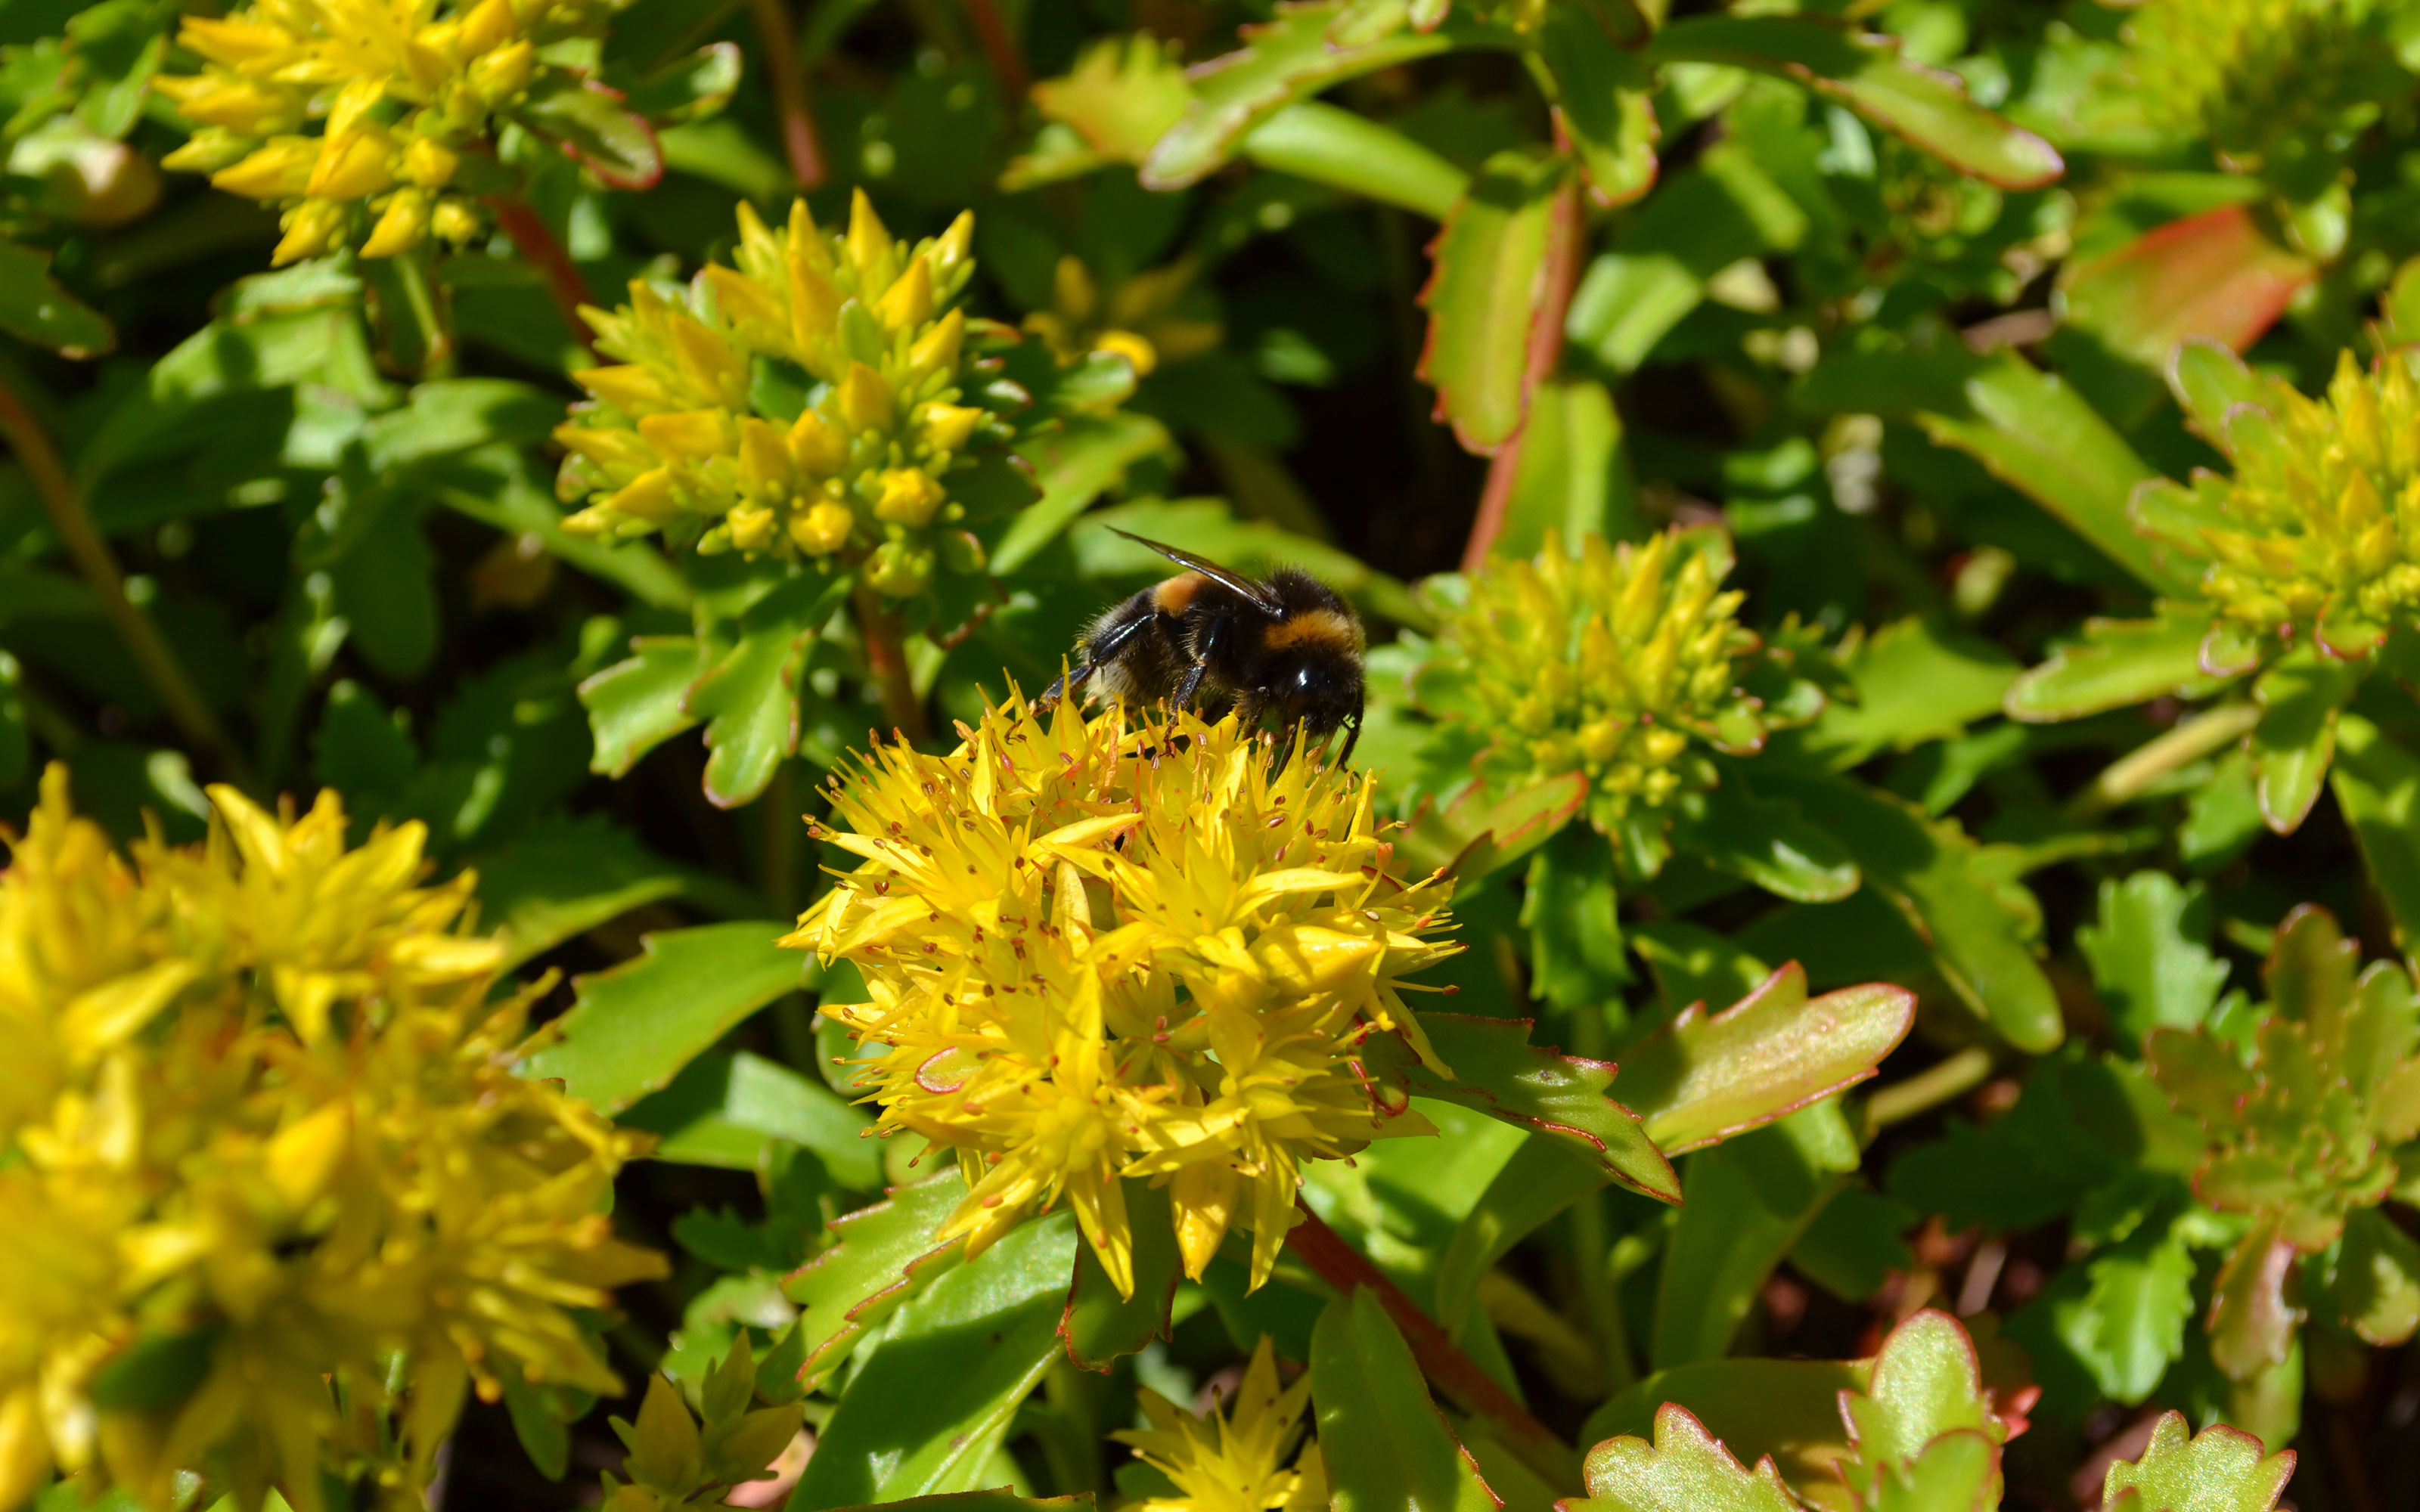 Bumble bee on Sedum flowers